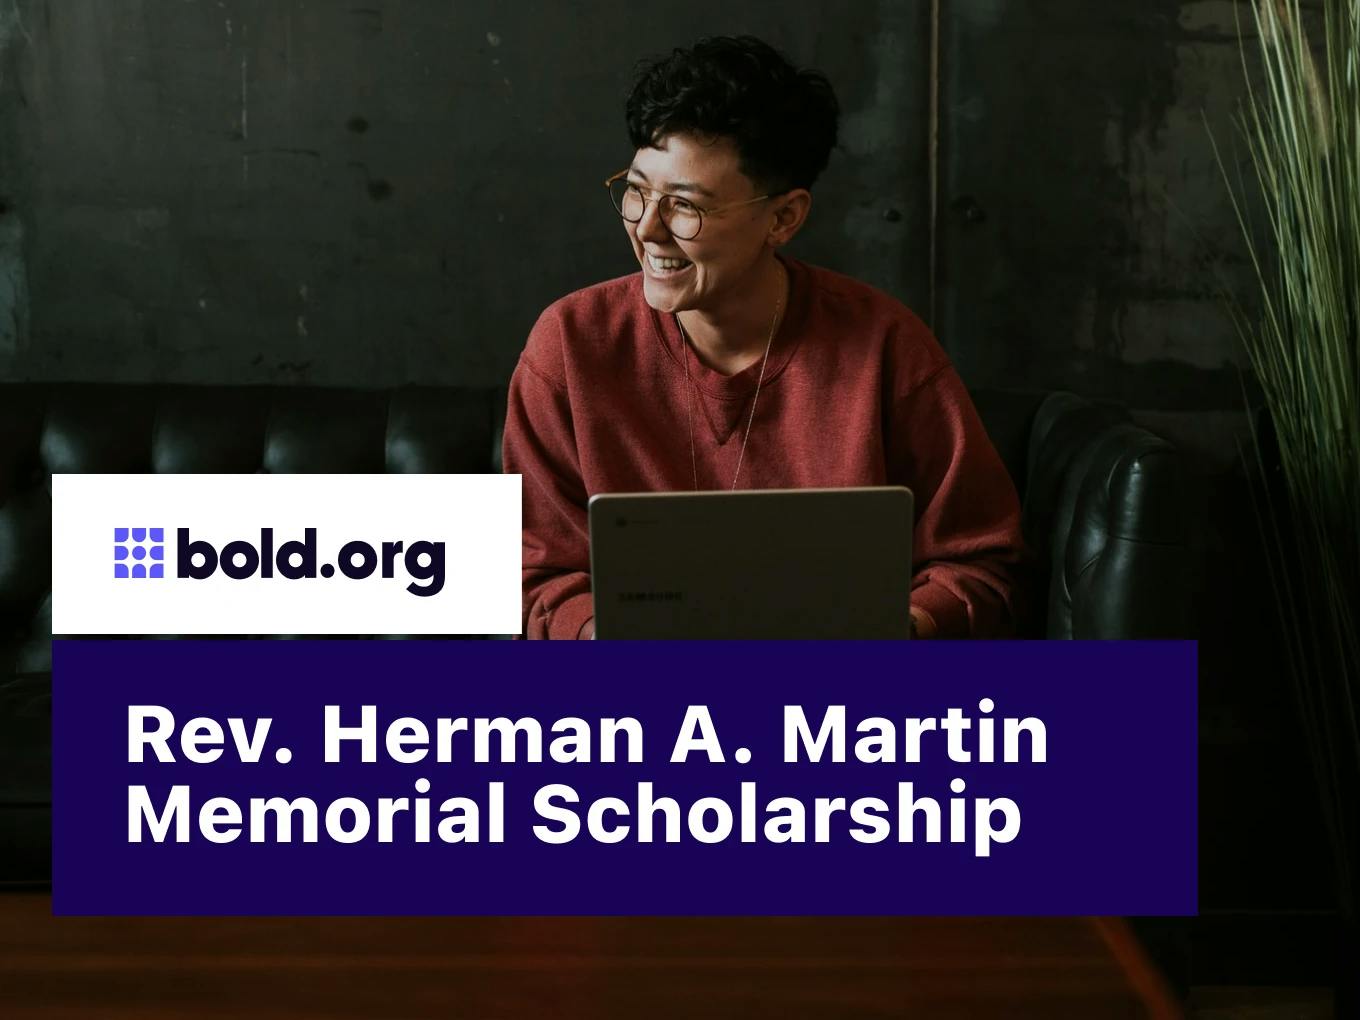 Rev. Herman A. Martin Memorial Scholarship